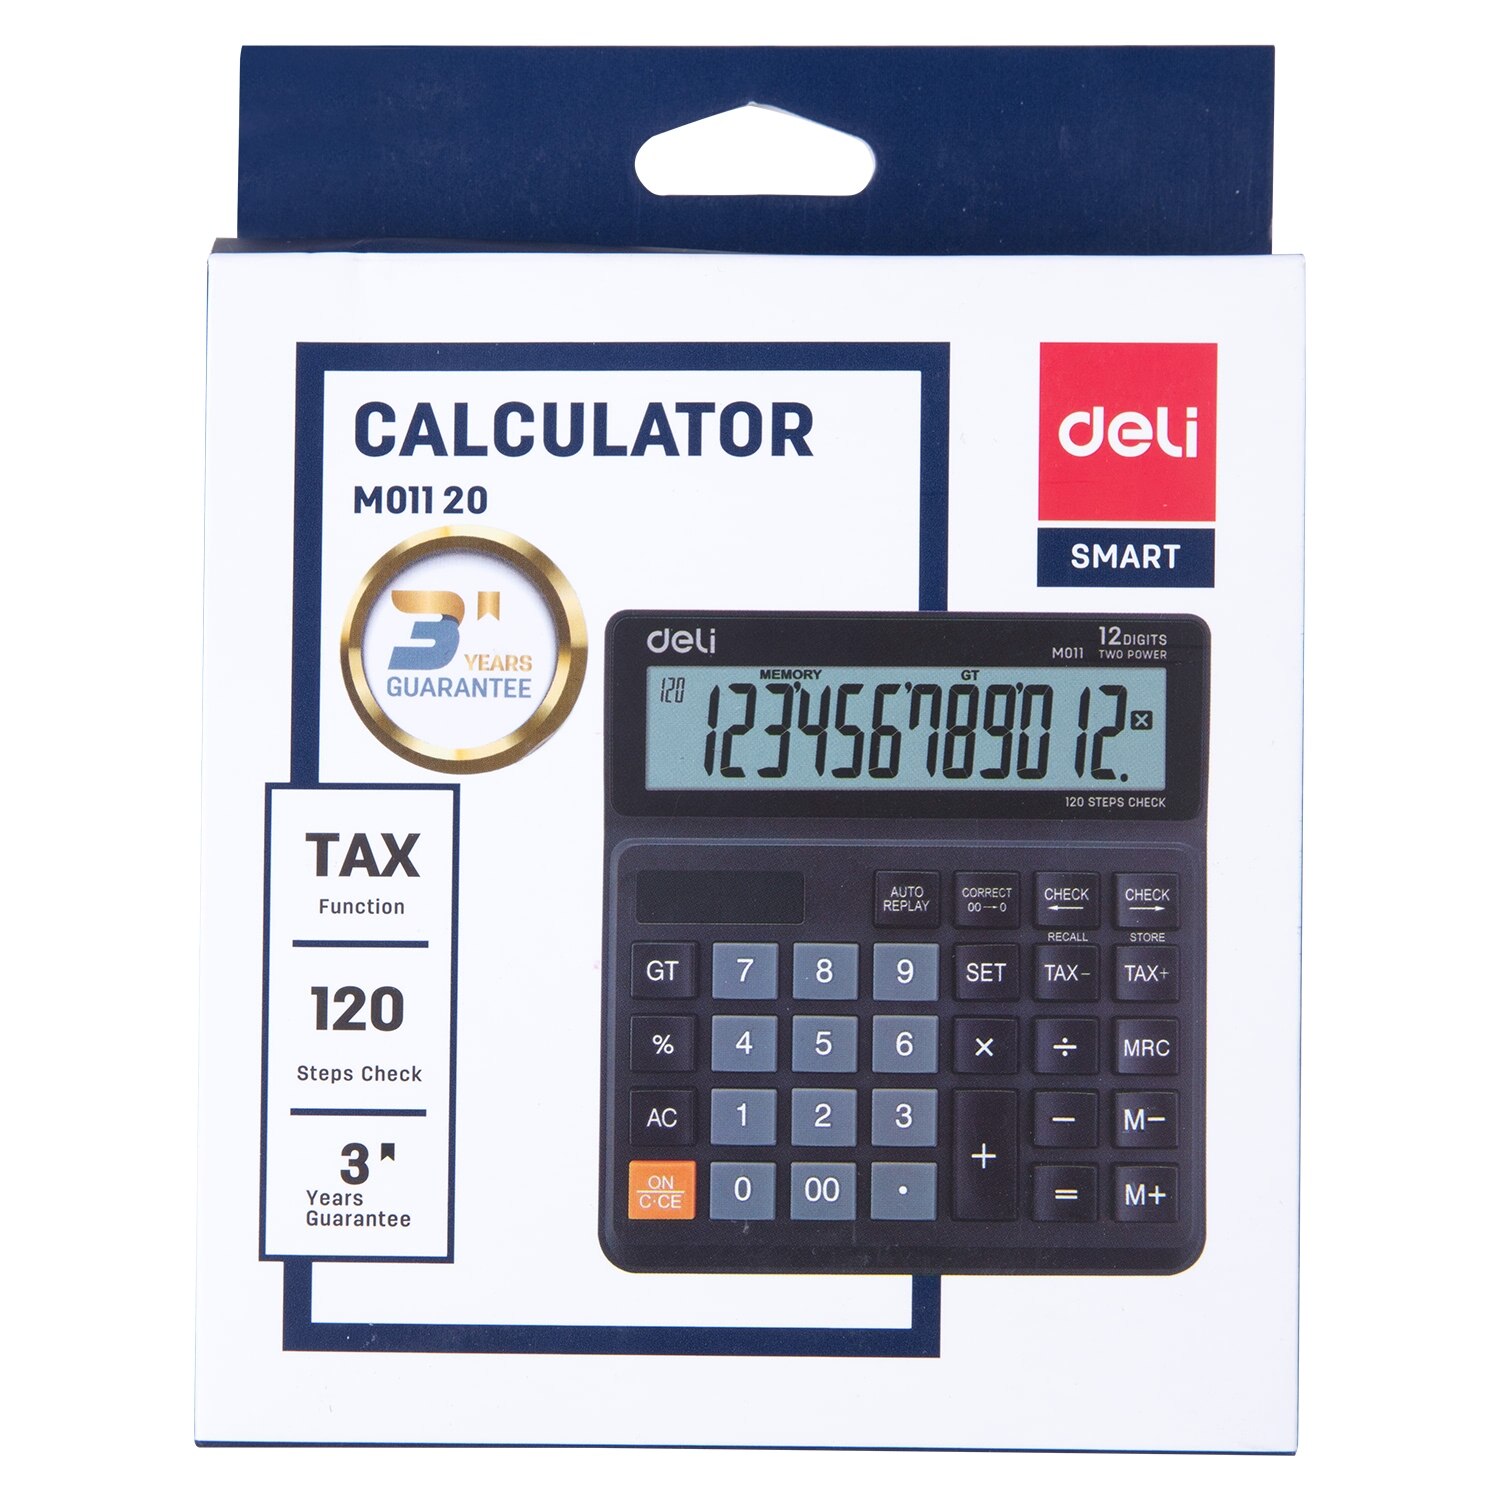 DELI EM01120 Calculator 12 digits 120 steps check correct function dual power auto off large screen desktop office calculators